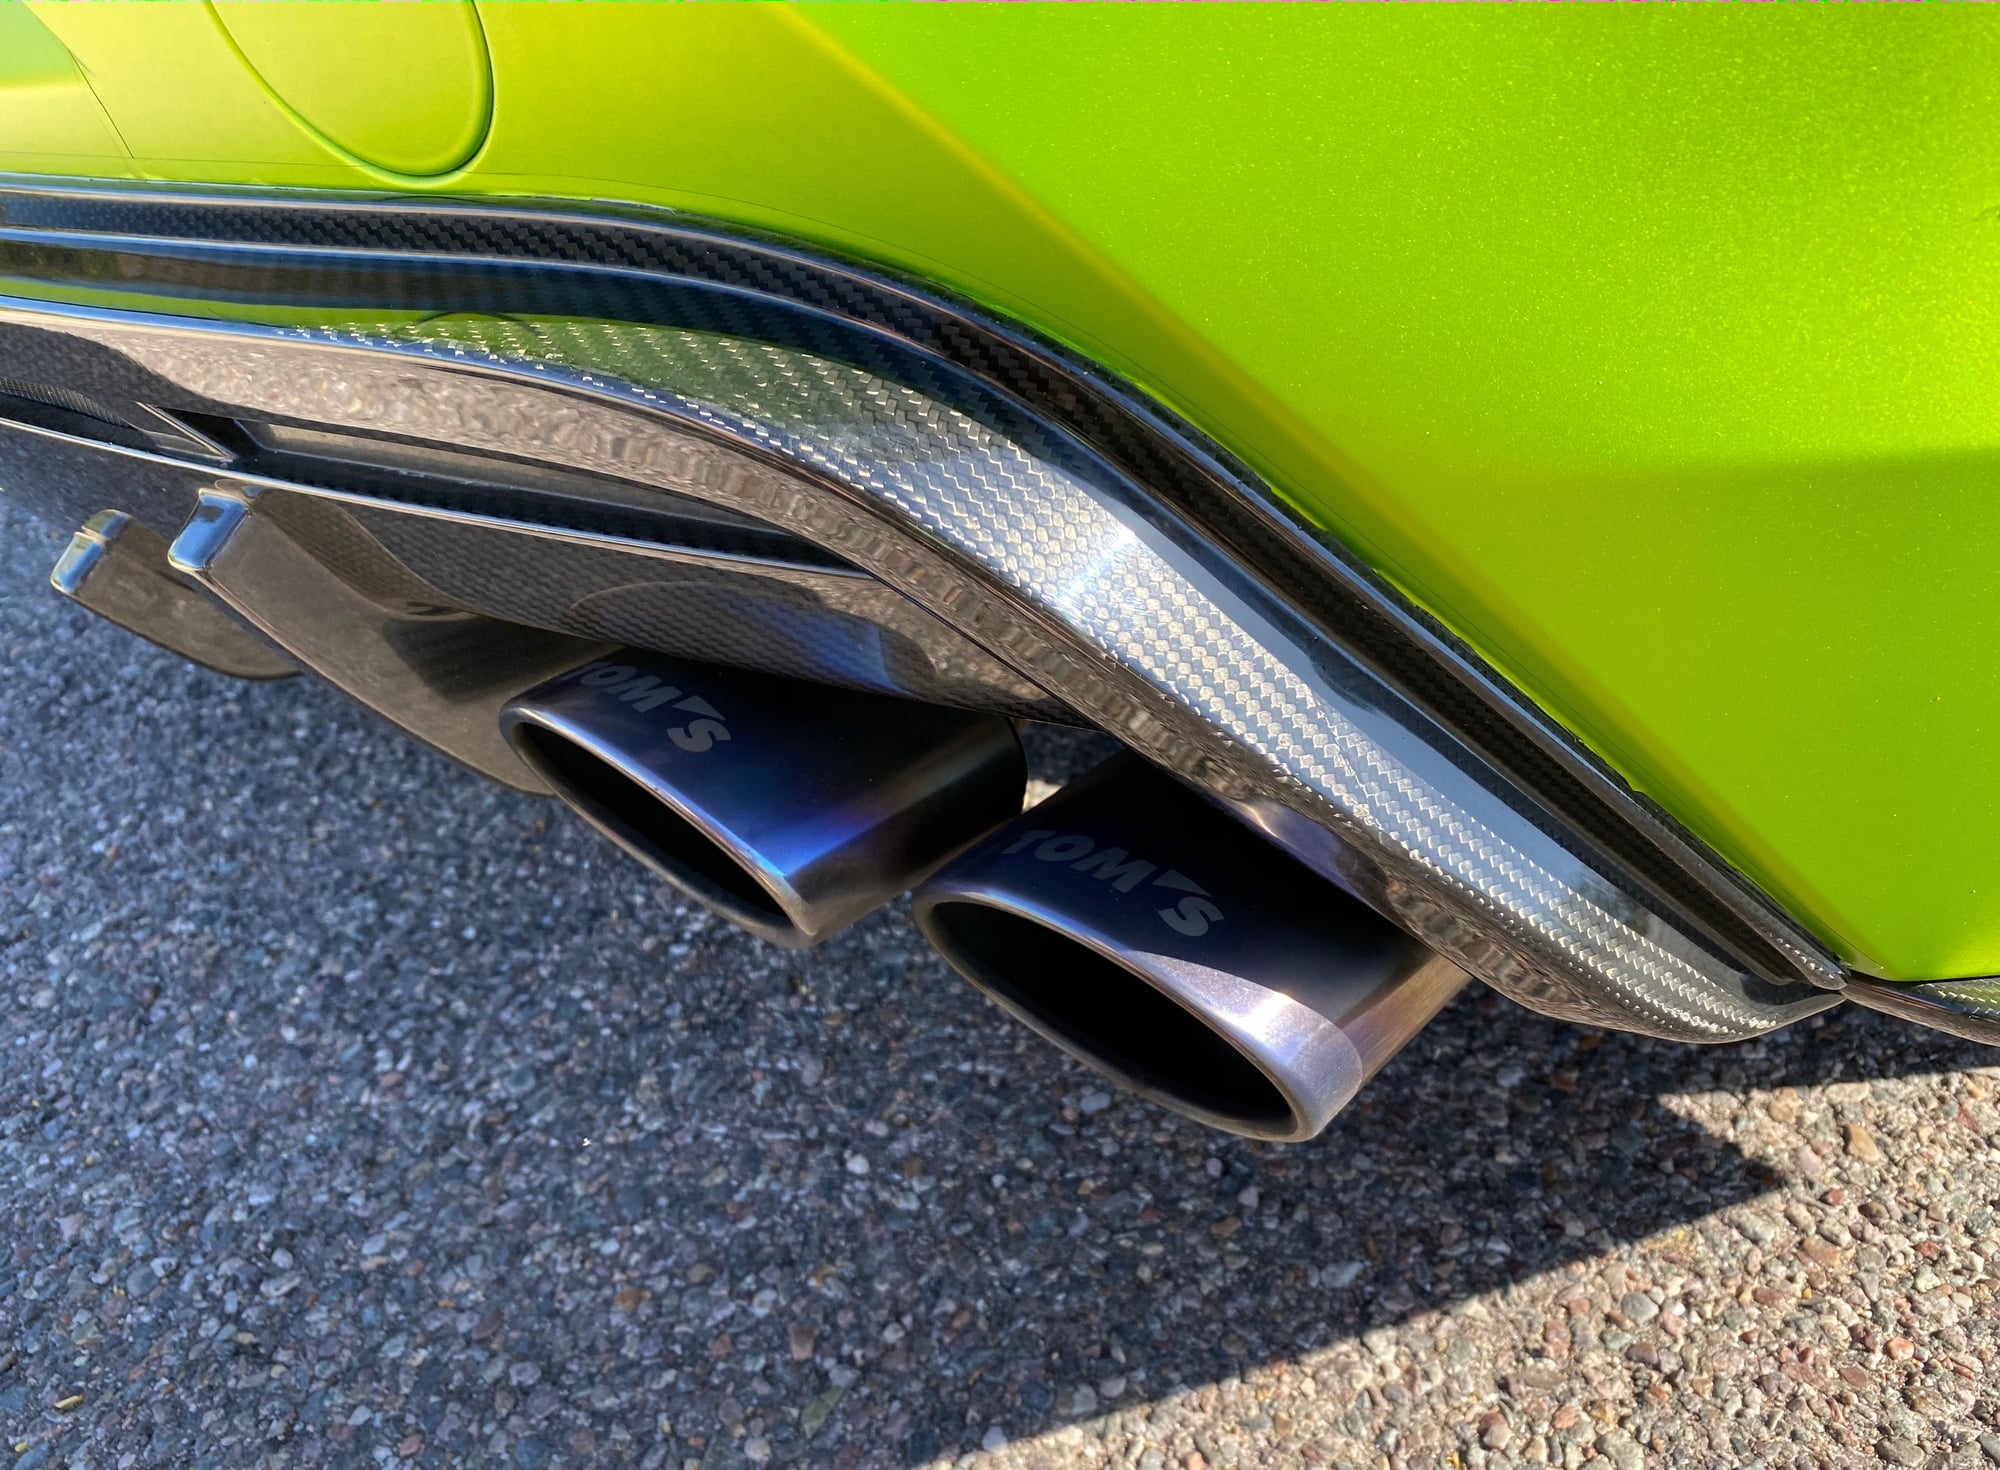 2018 Lexus LC500 - Tom's Carbon Aero Kit + Seibon Carbon Fiber Hood + 21" Carbon Fiber Wheel w/tires - Phoenix, AZ 85022, United States